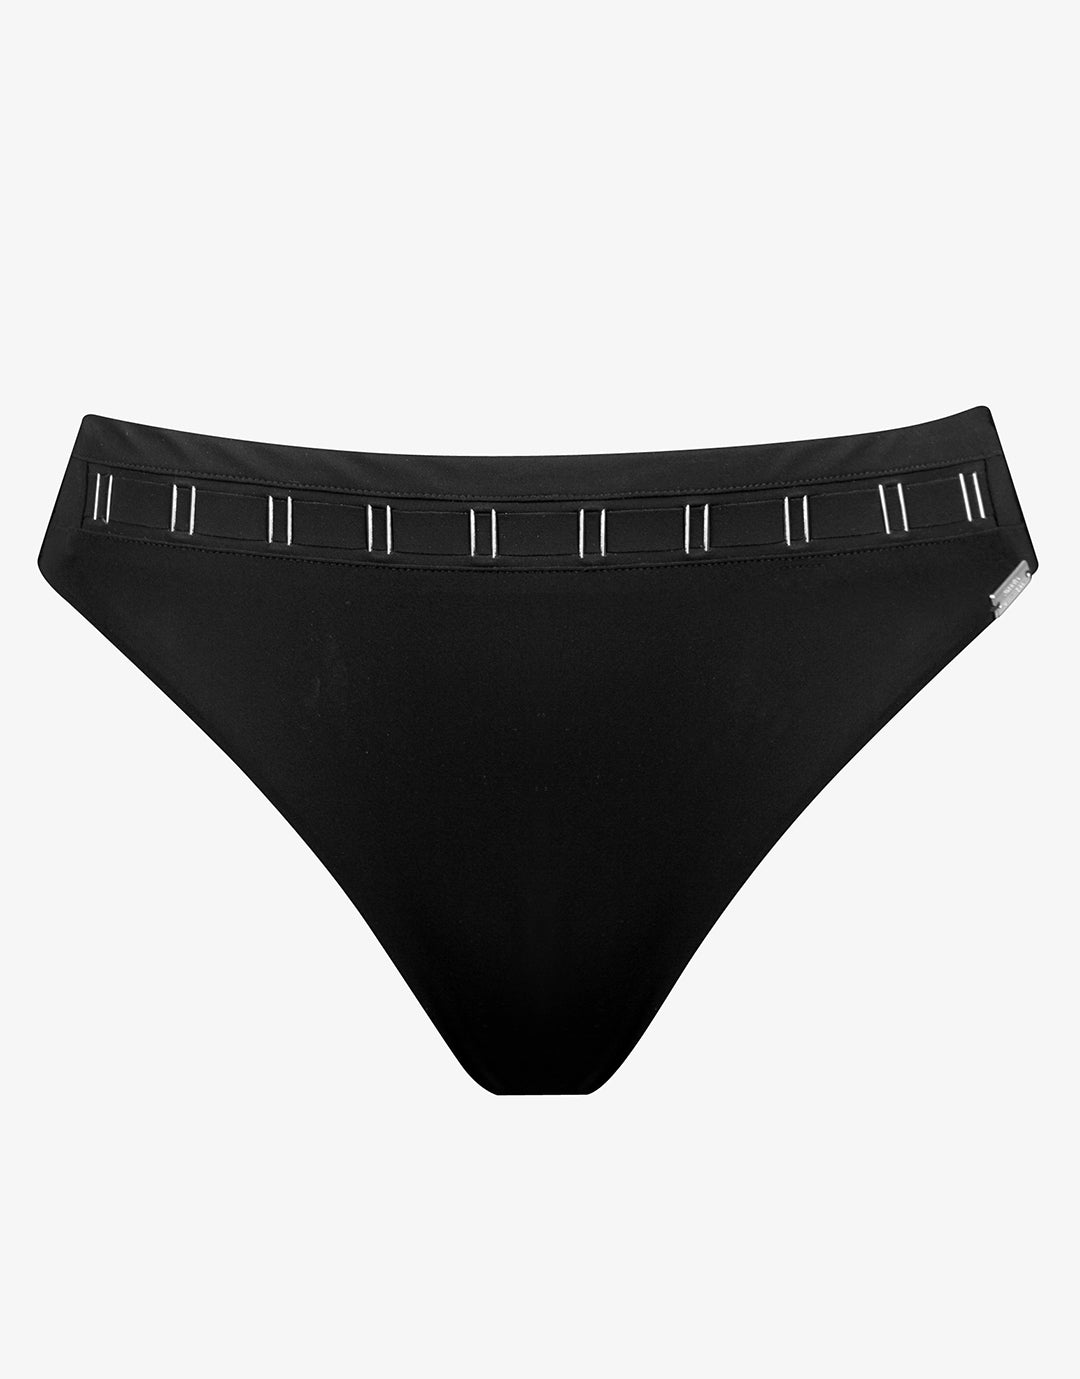 Code Bikini Pant - Black - Simply Beach UK